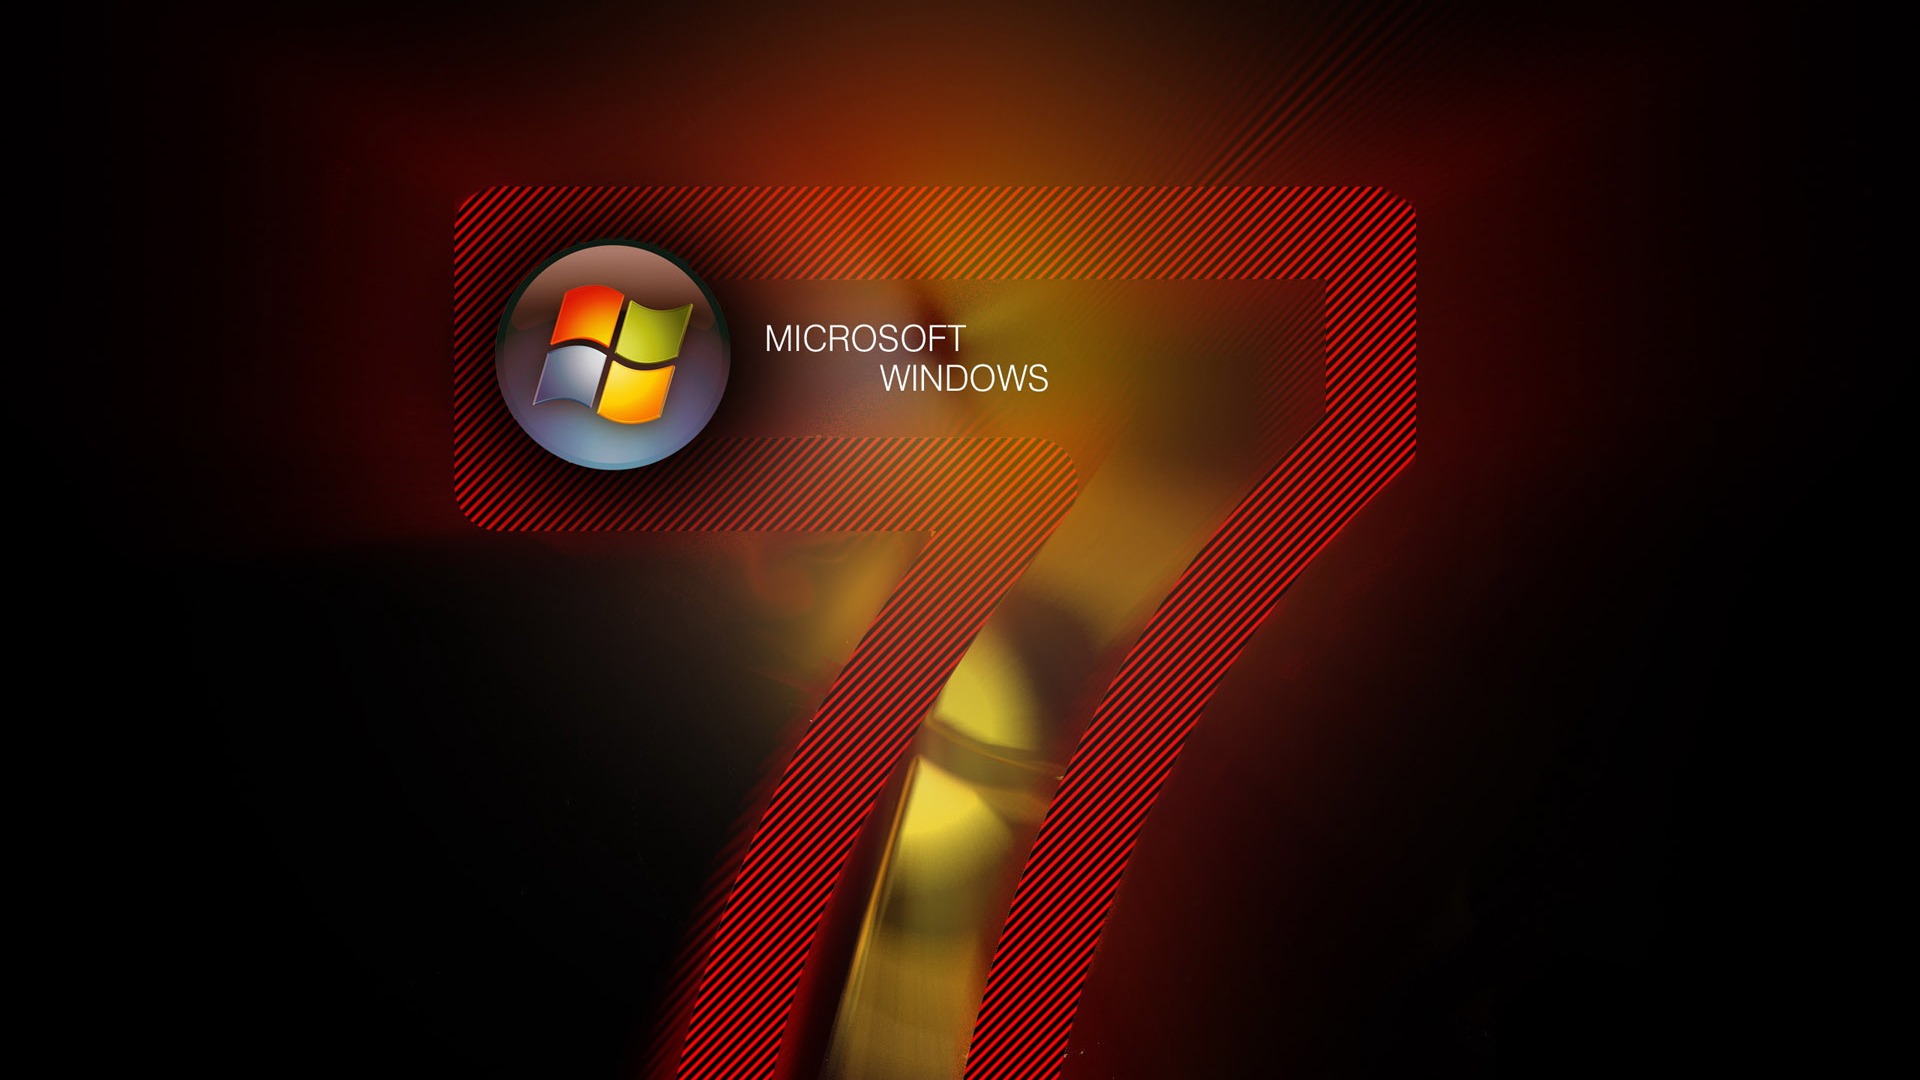 Fondos de escritorio de Windows7 #2 - 1920x1080